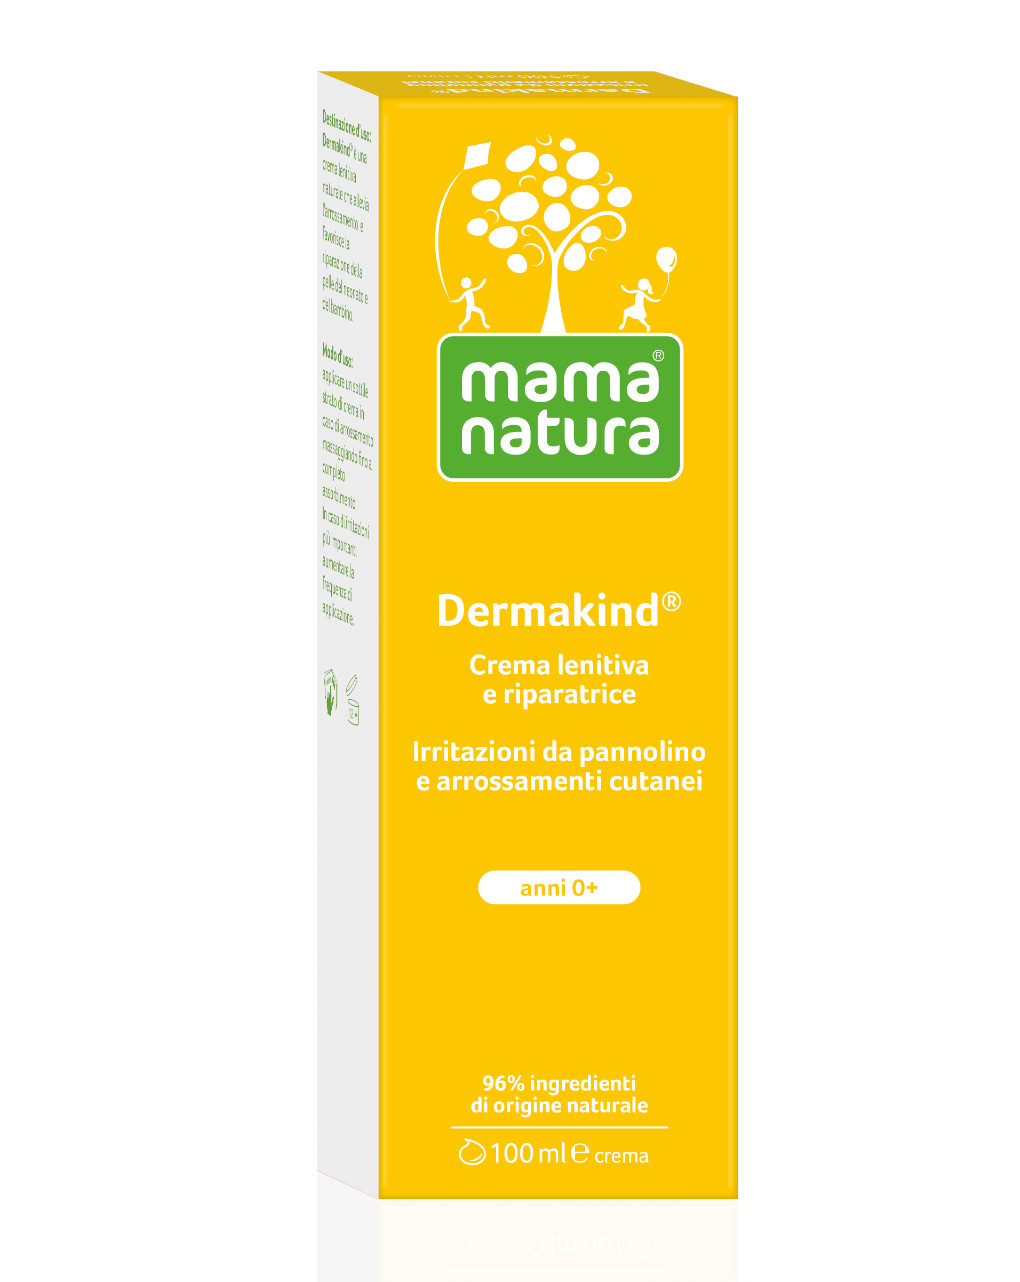 Dermakind crema lenitiva schwabe - mama natura - MAMA NATURA